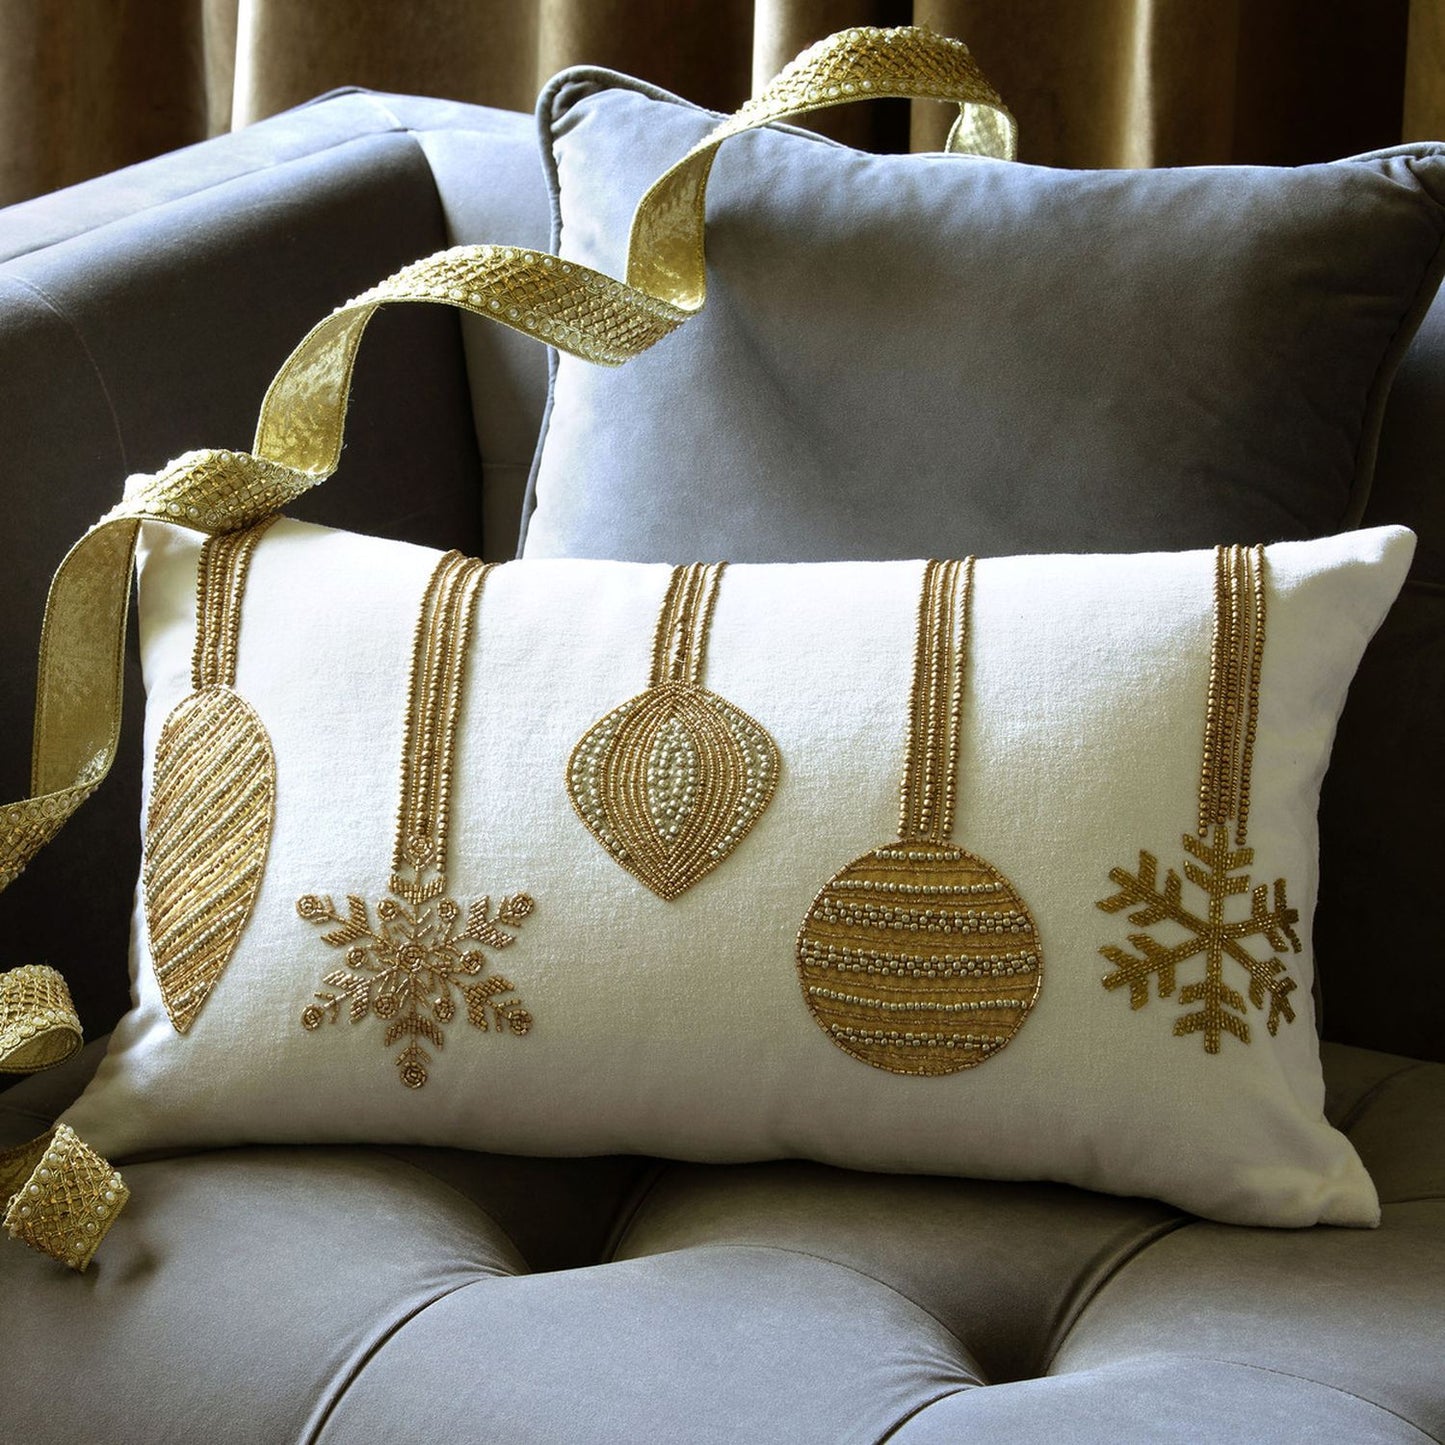 Park Hill Collection Holiday Splendor Holiday Splendor Ornaments Pillow